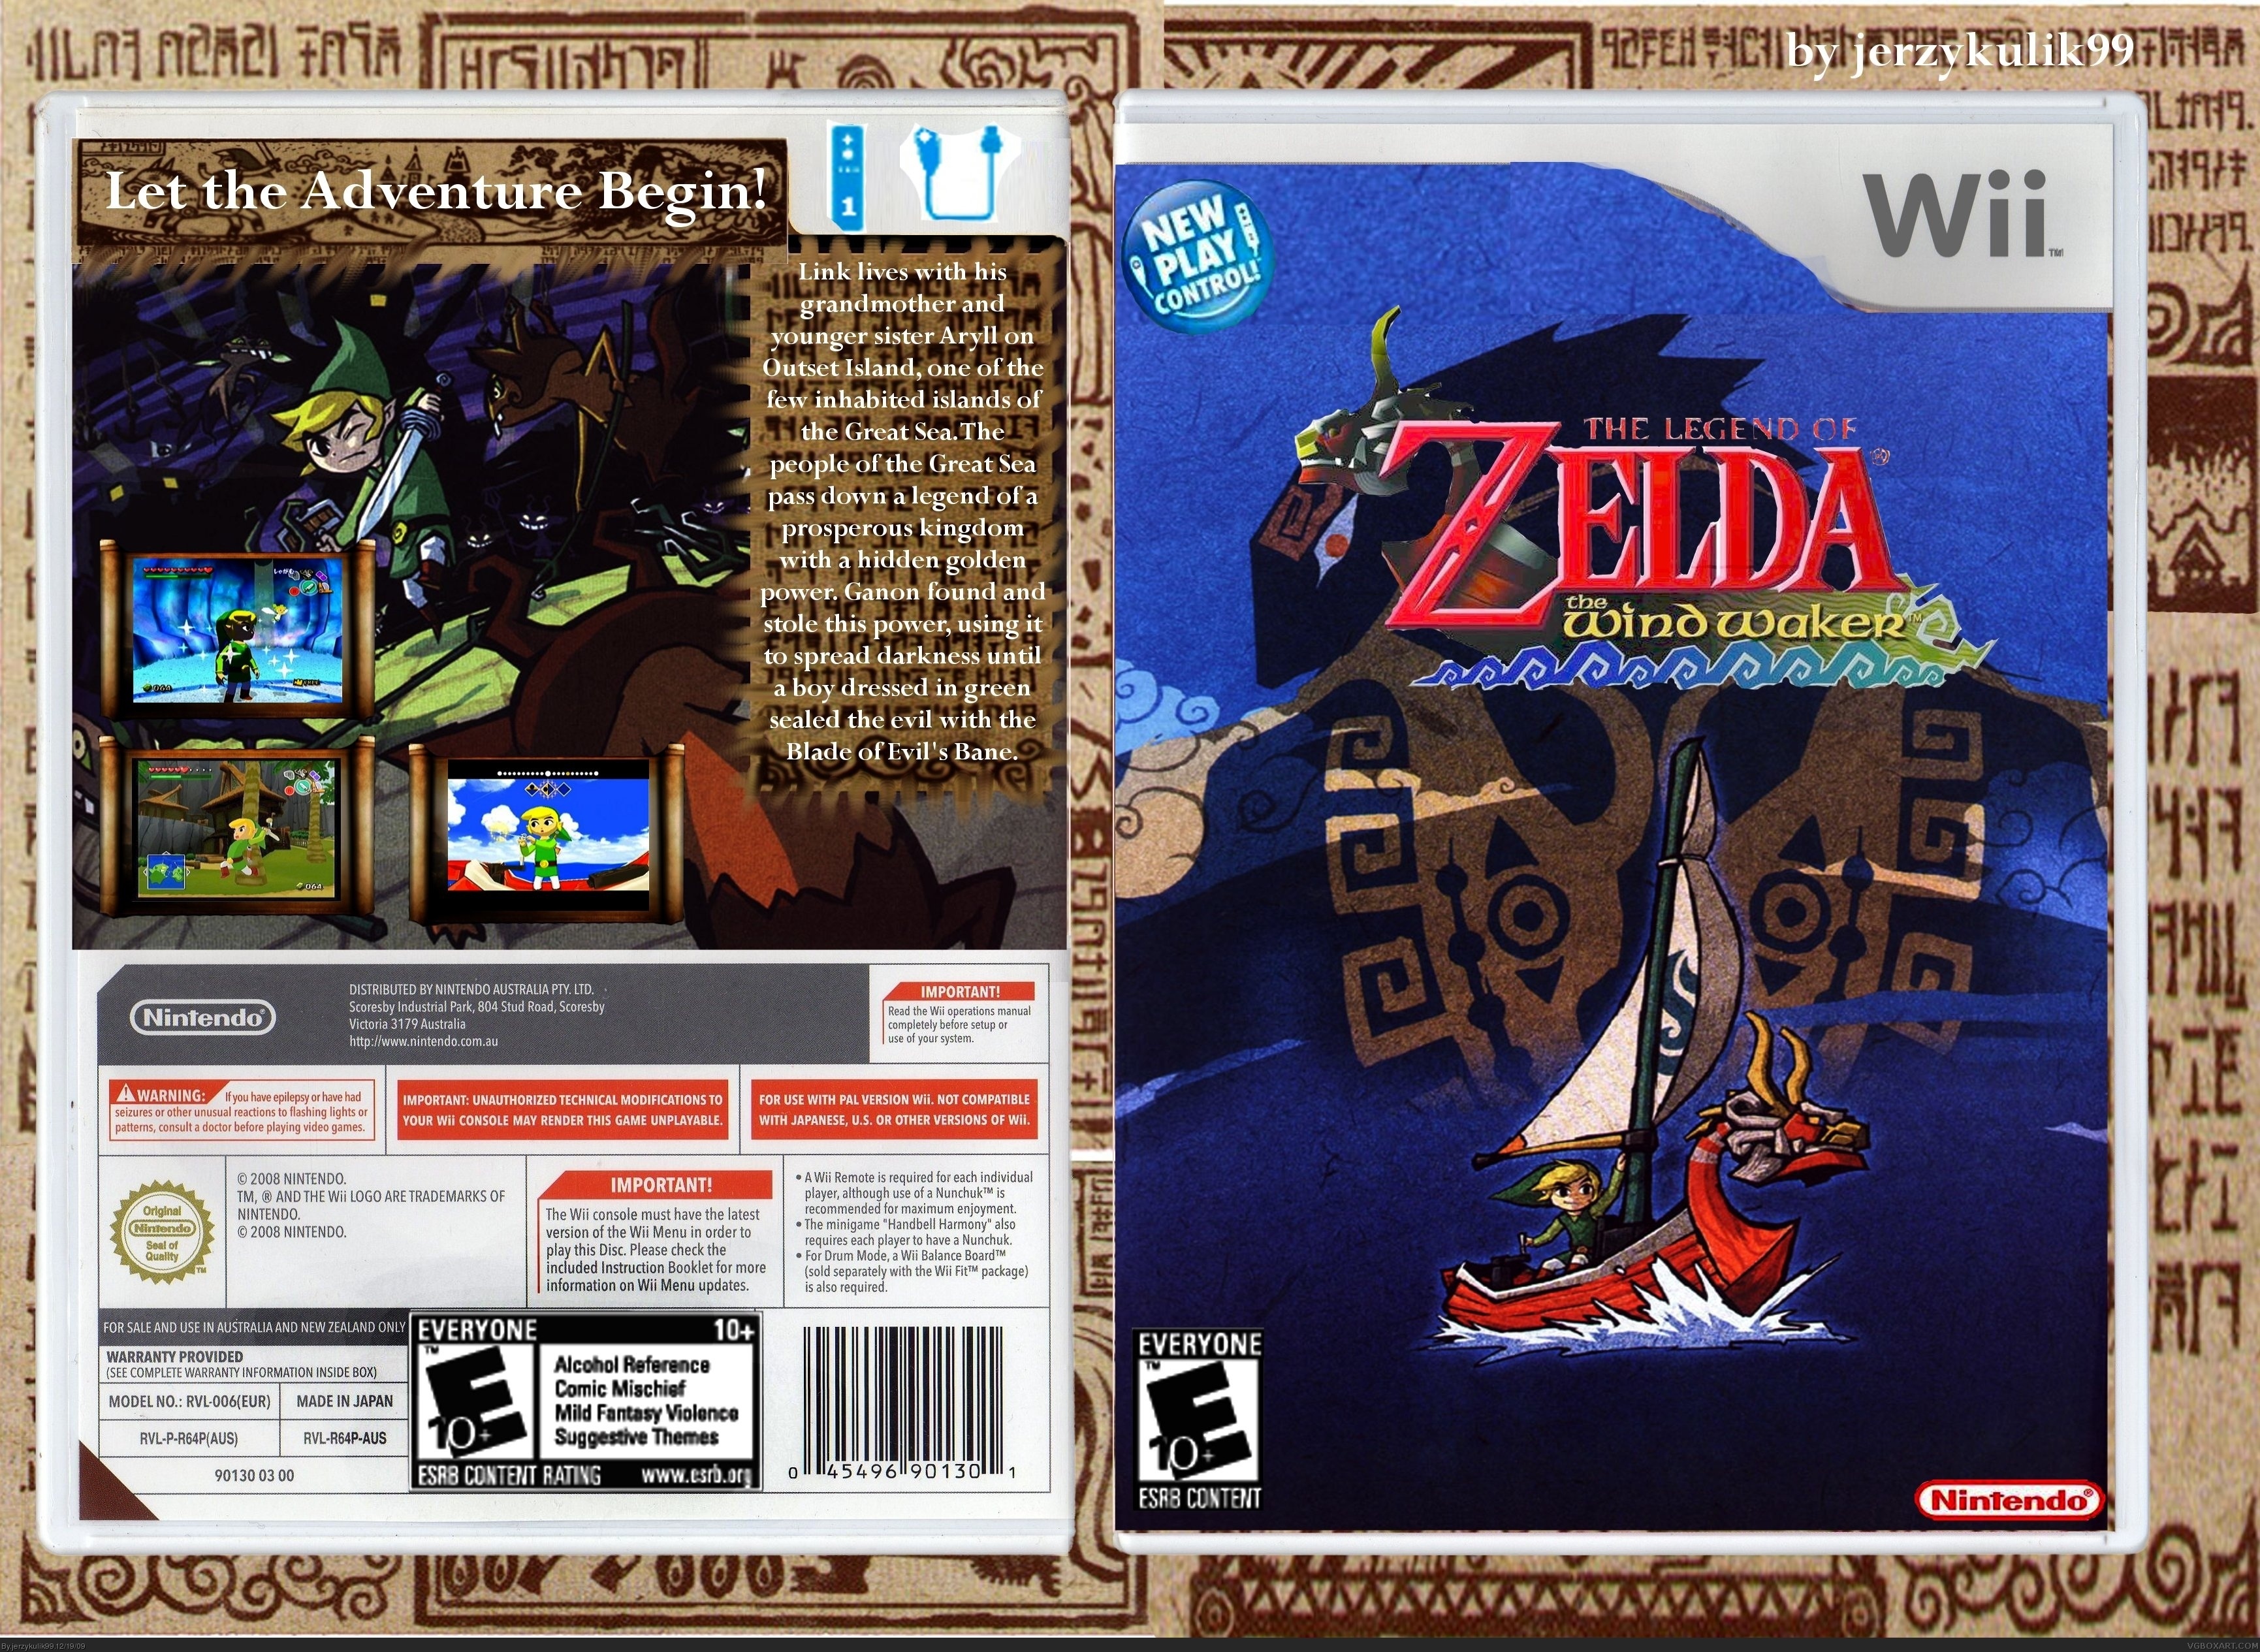 The Legend of Zelda: Wind Waker box cover